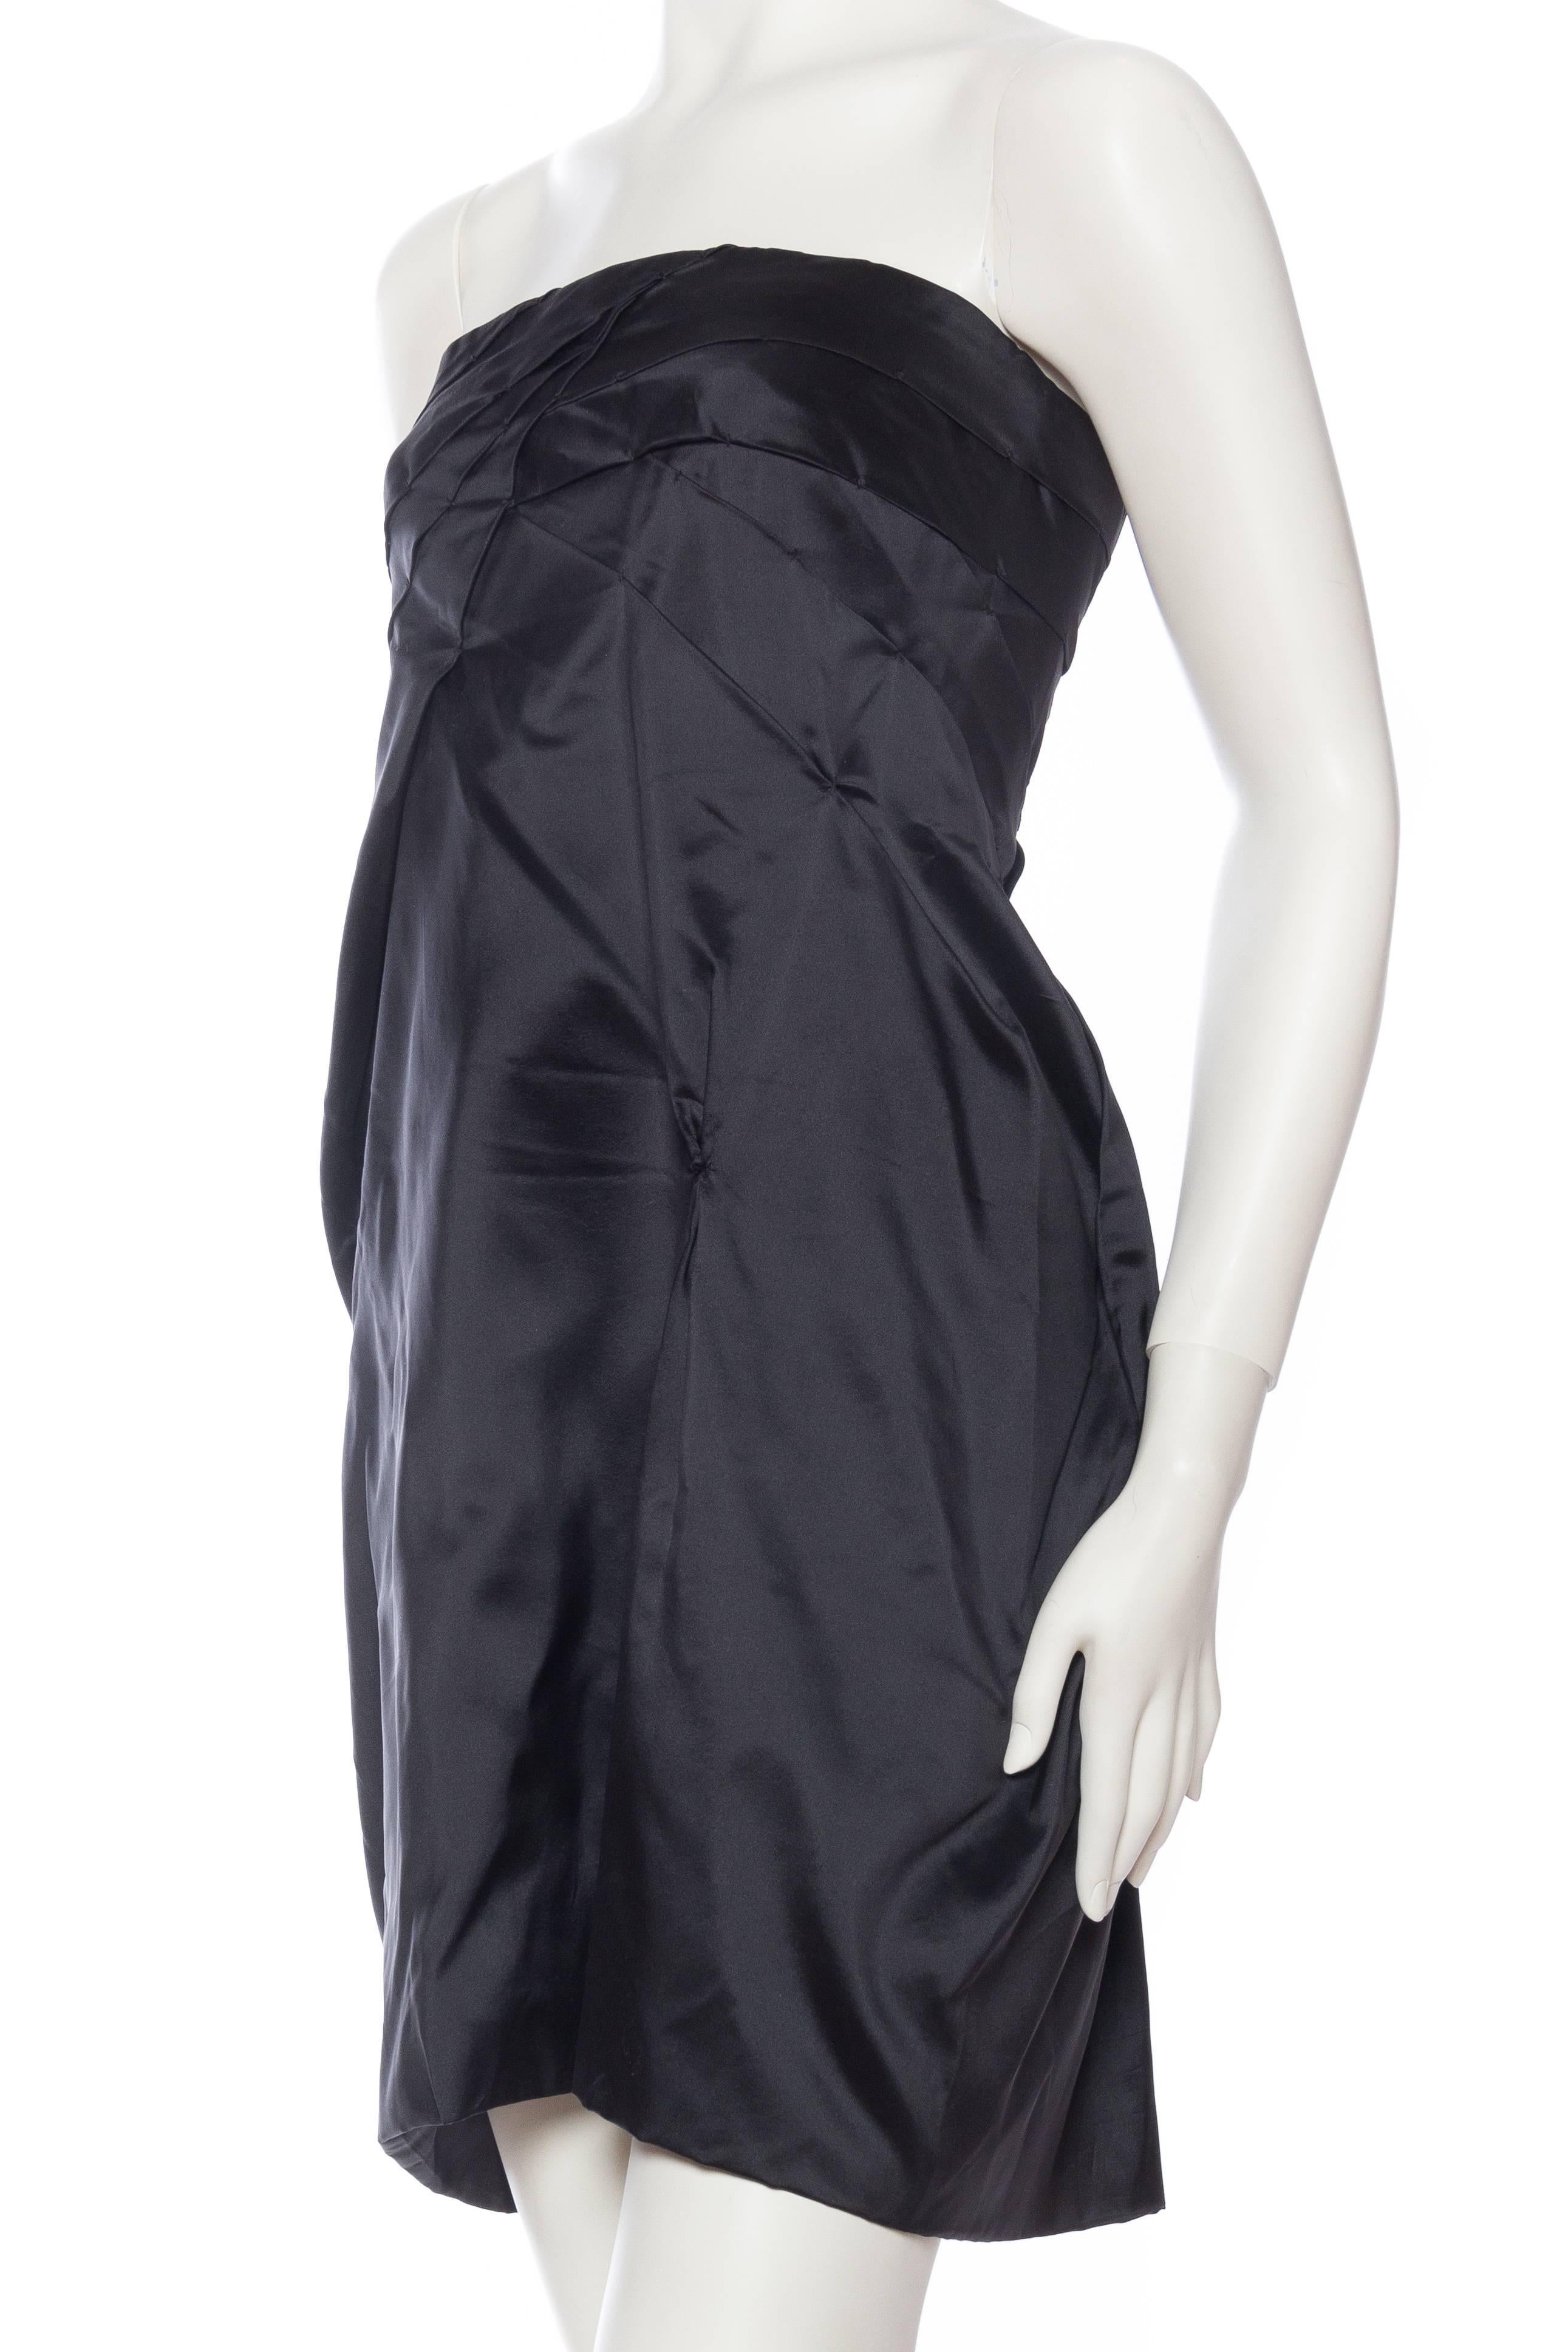 Modern 1950s Style Strapless Taffeta Dress by Miu Miu 1